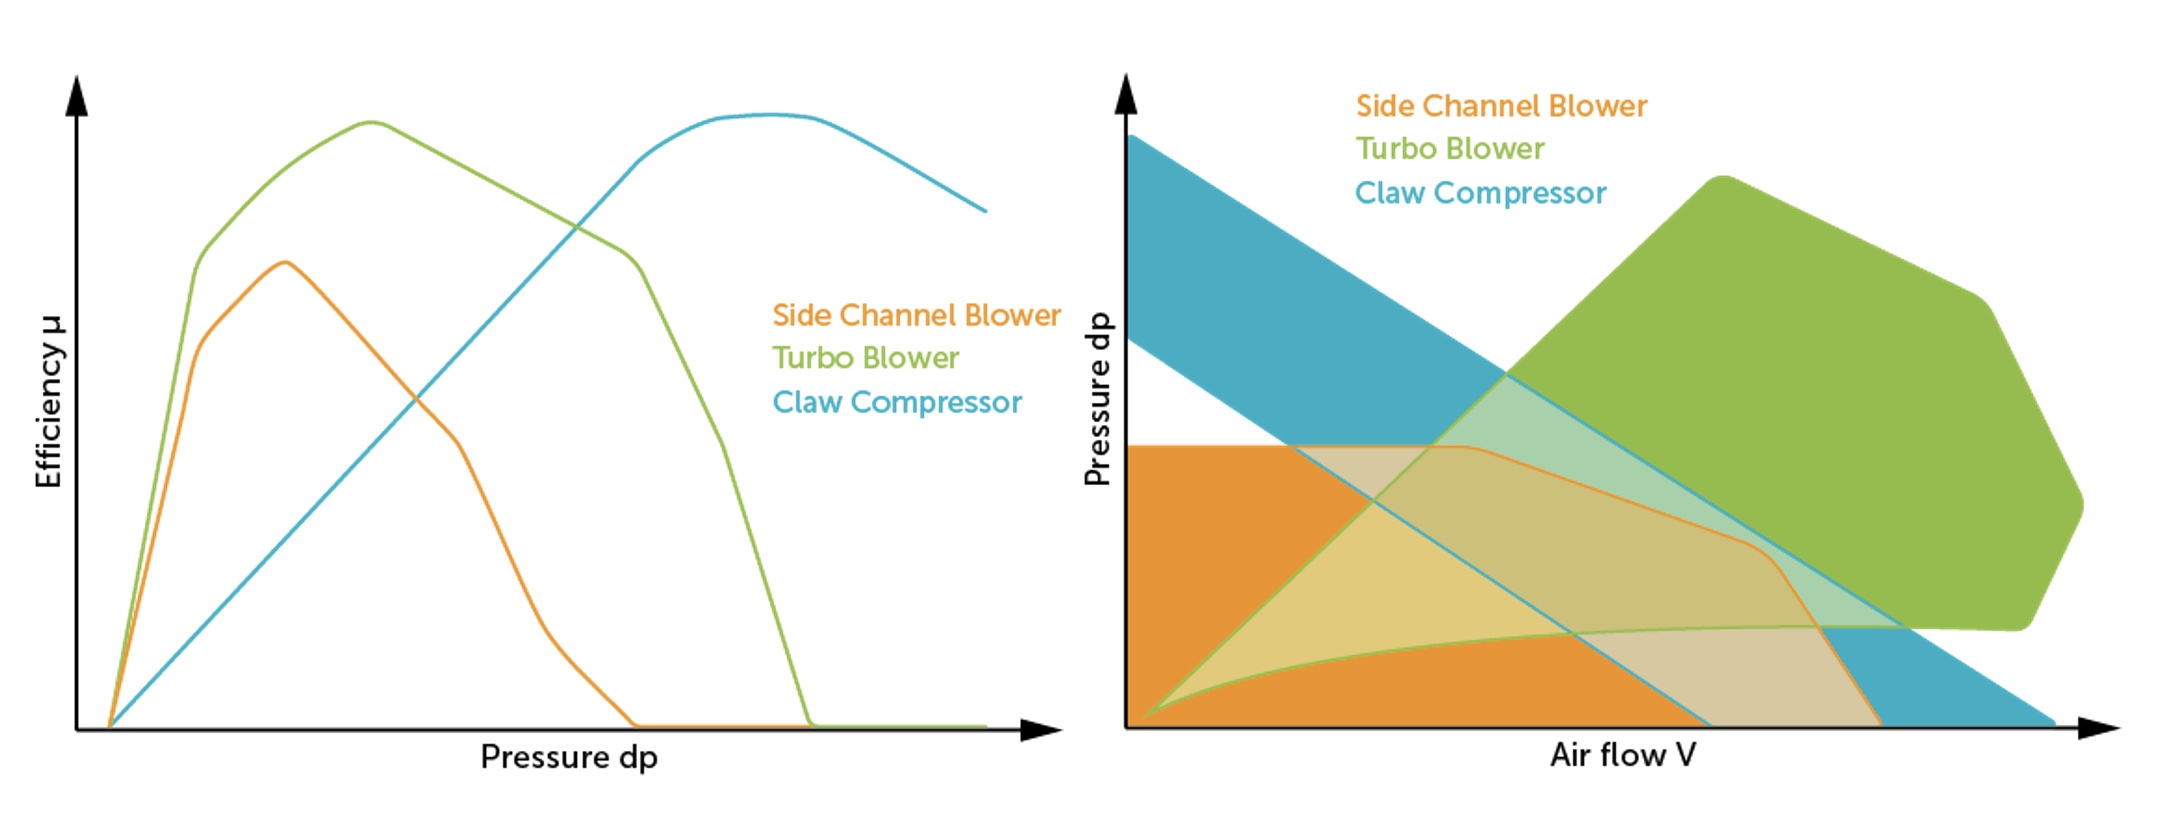 cathode blower - Pressure drop diagram